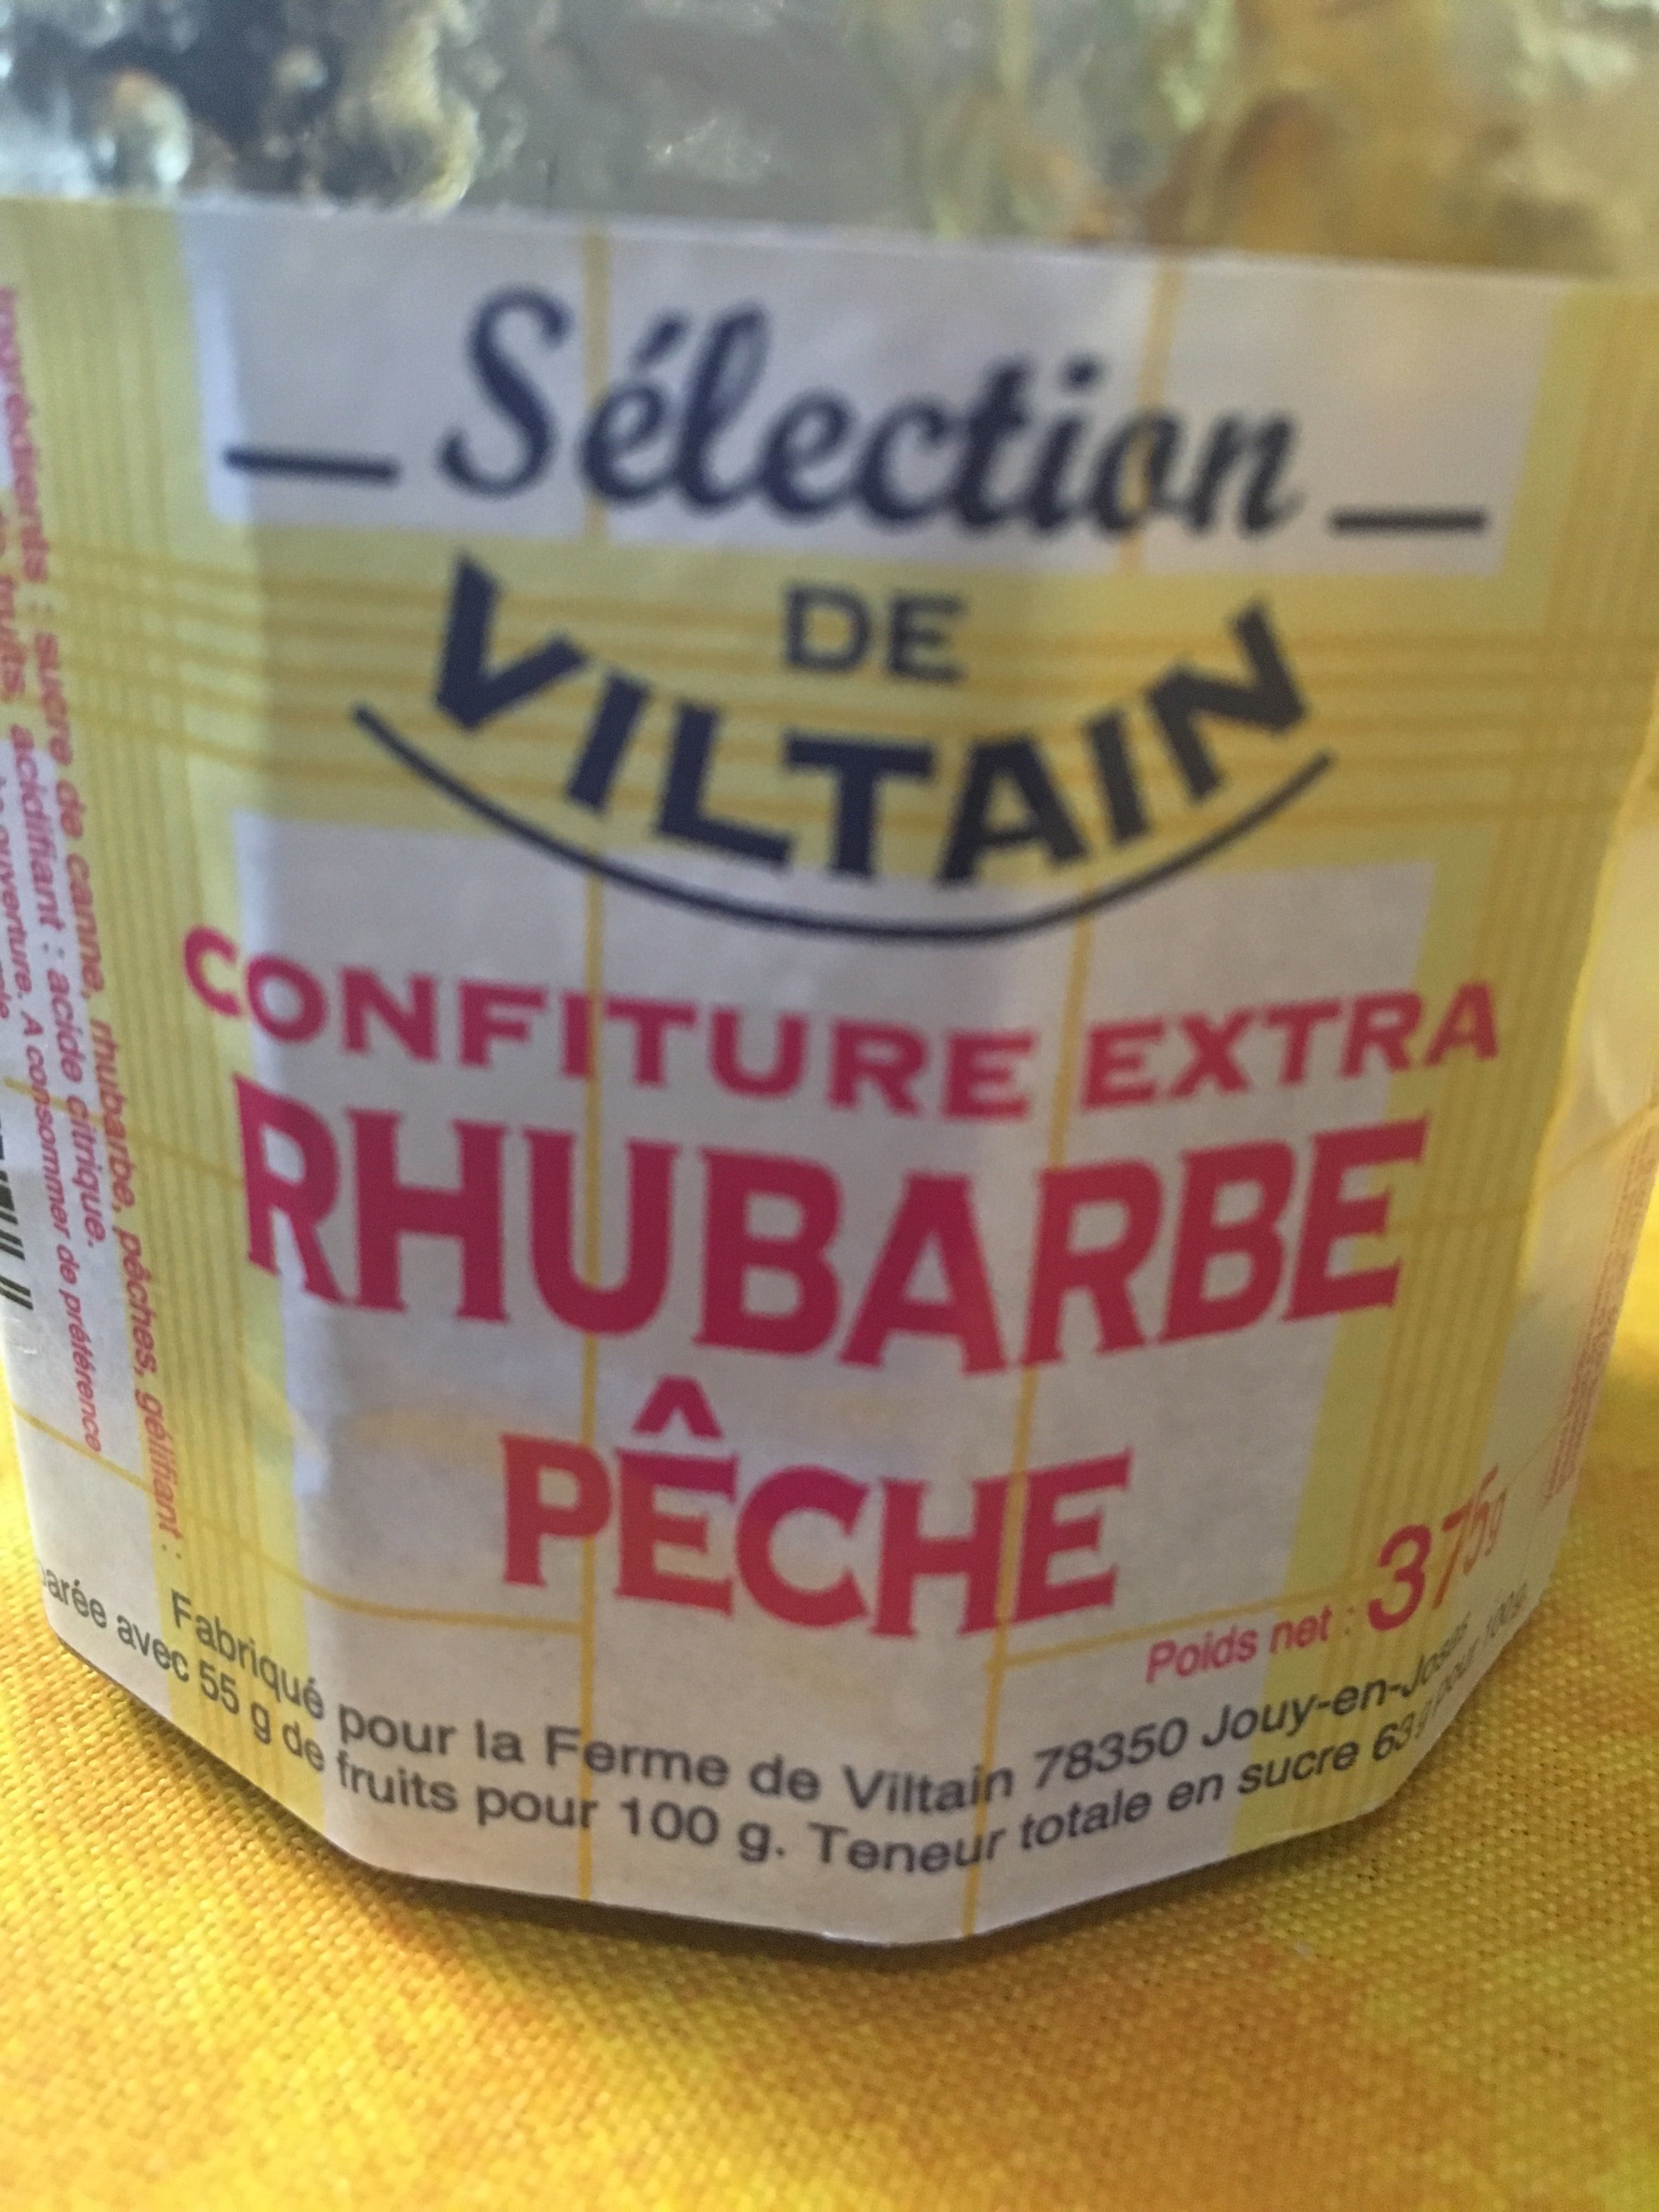 Confiture rhubarbe pêche - Product - fr